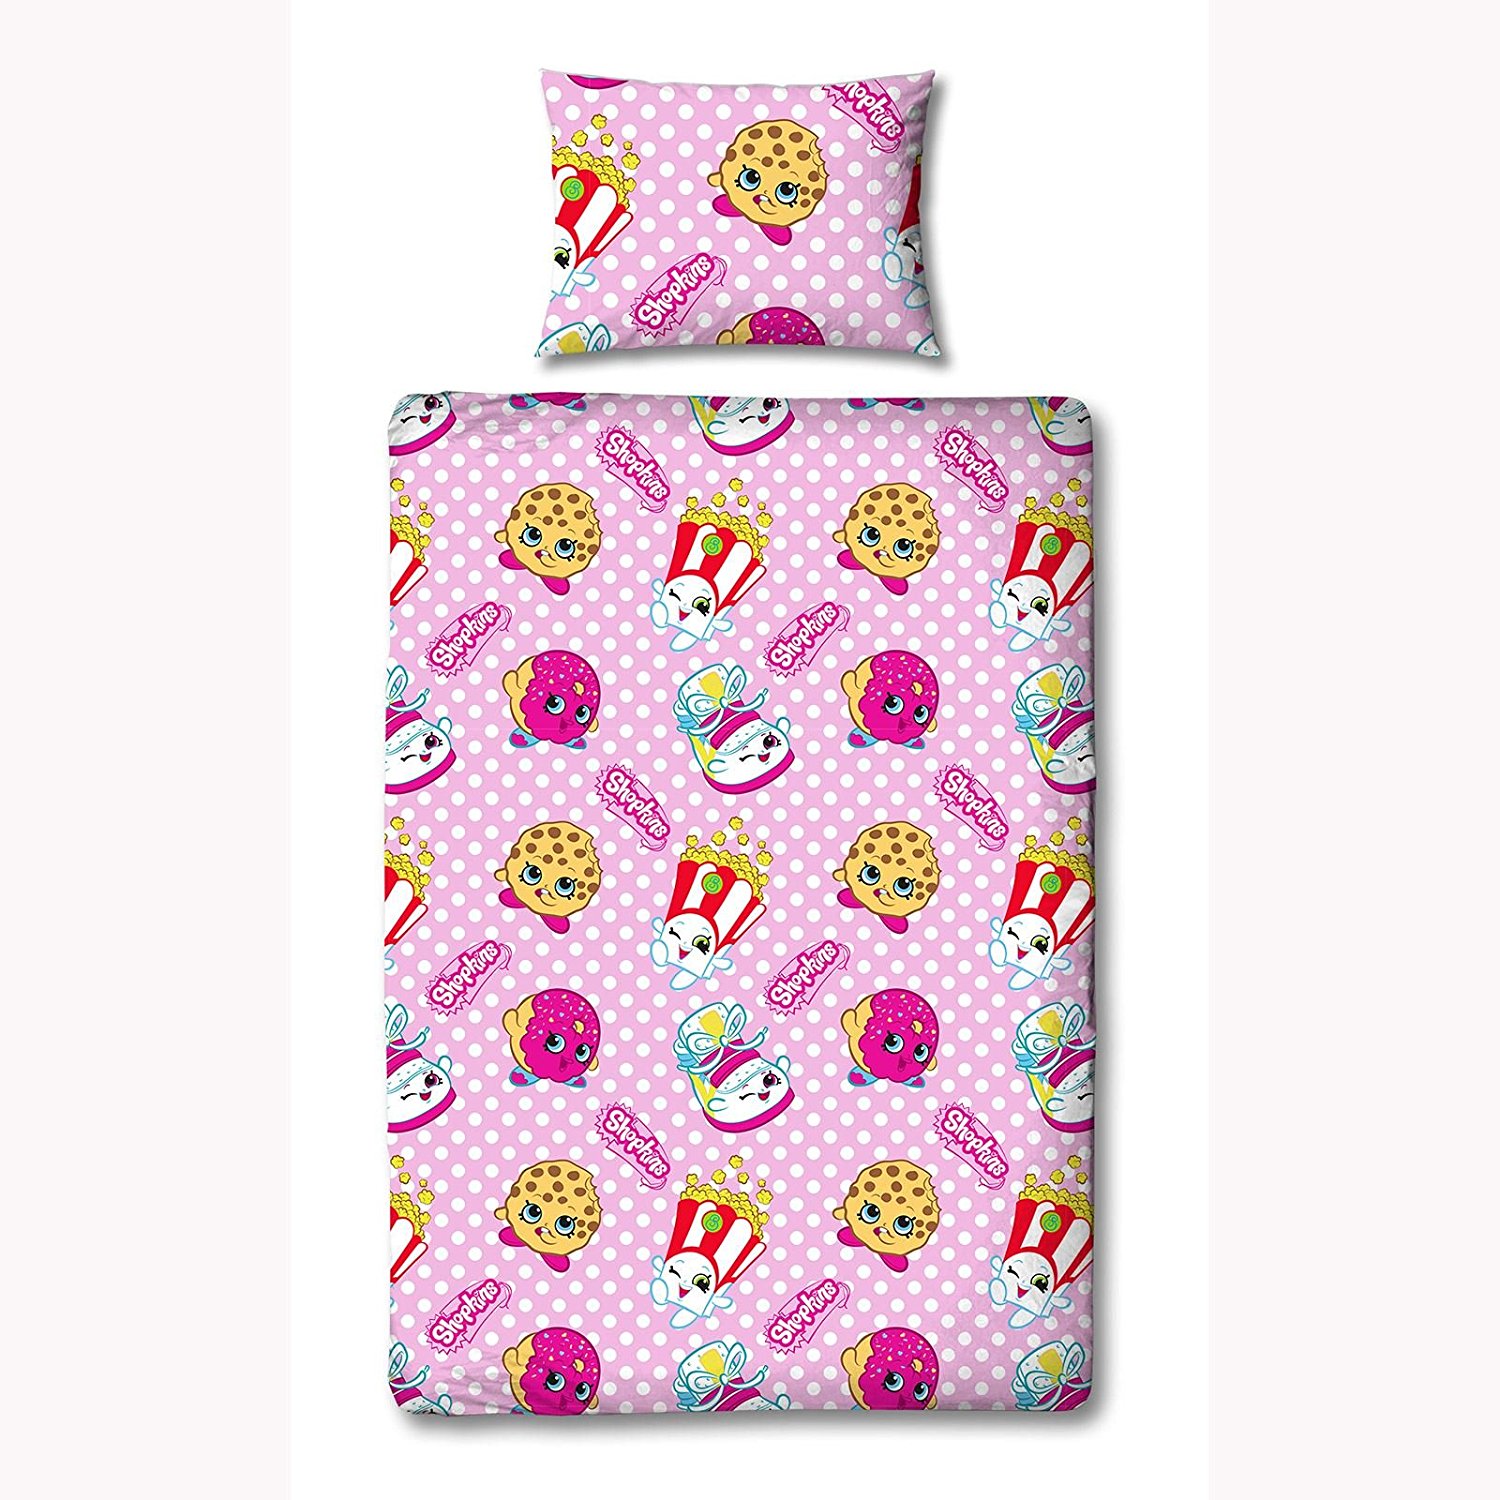 Shopkins 'Jumble' Reversible Rotary Single Bed Duvet Quilt Cover Set